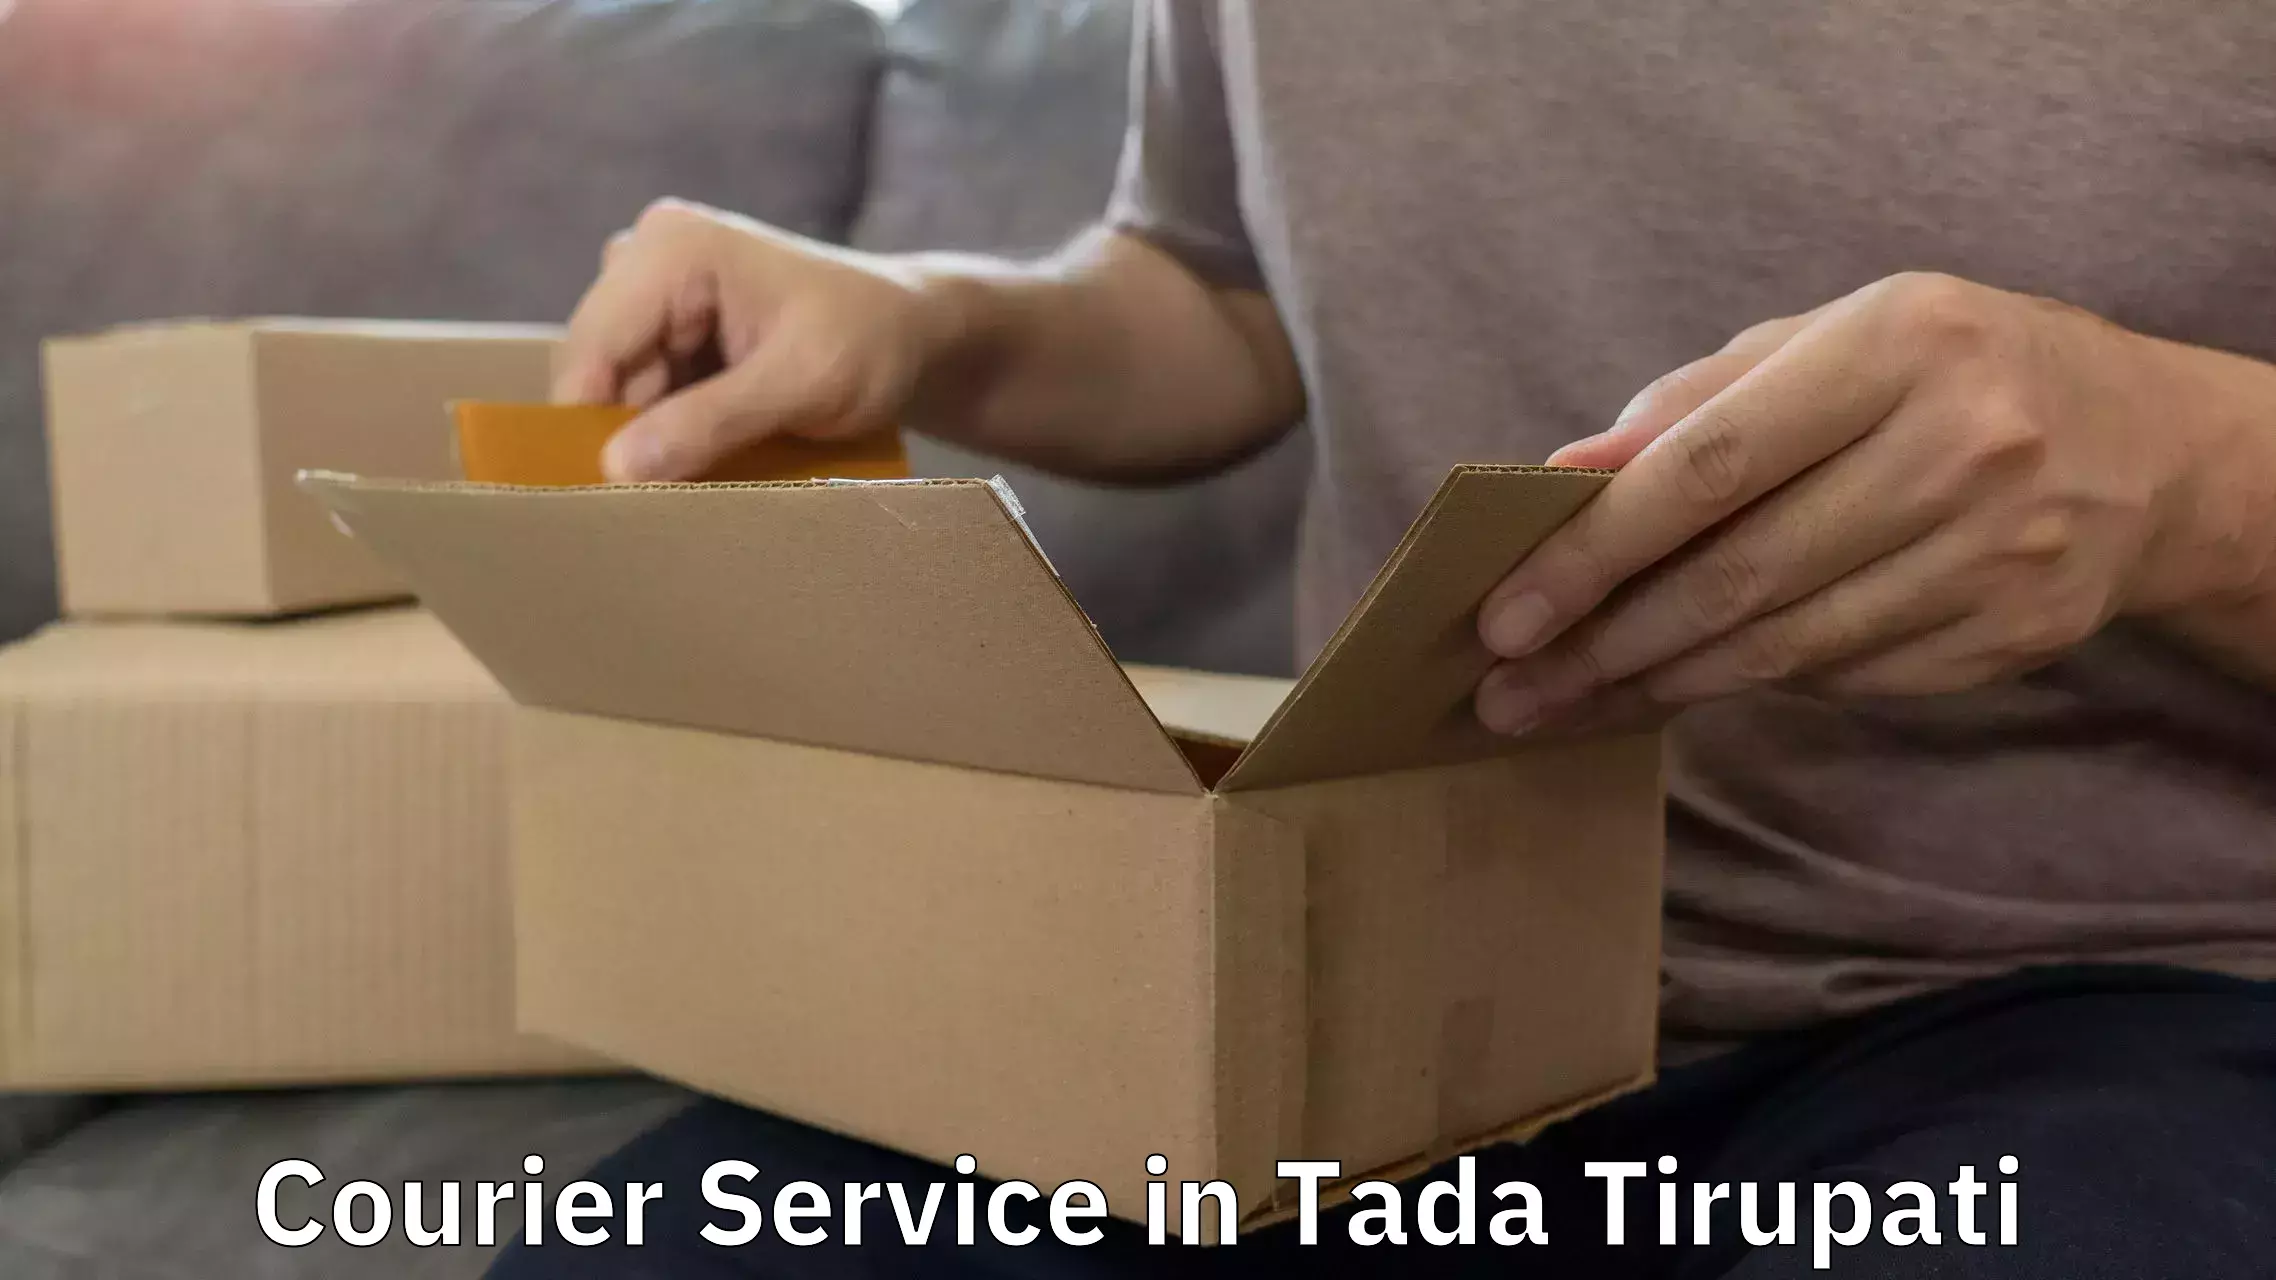 Same-day delivery options in Tada Tirupati